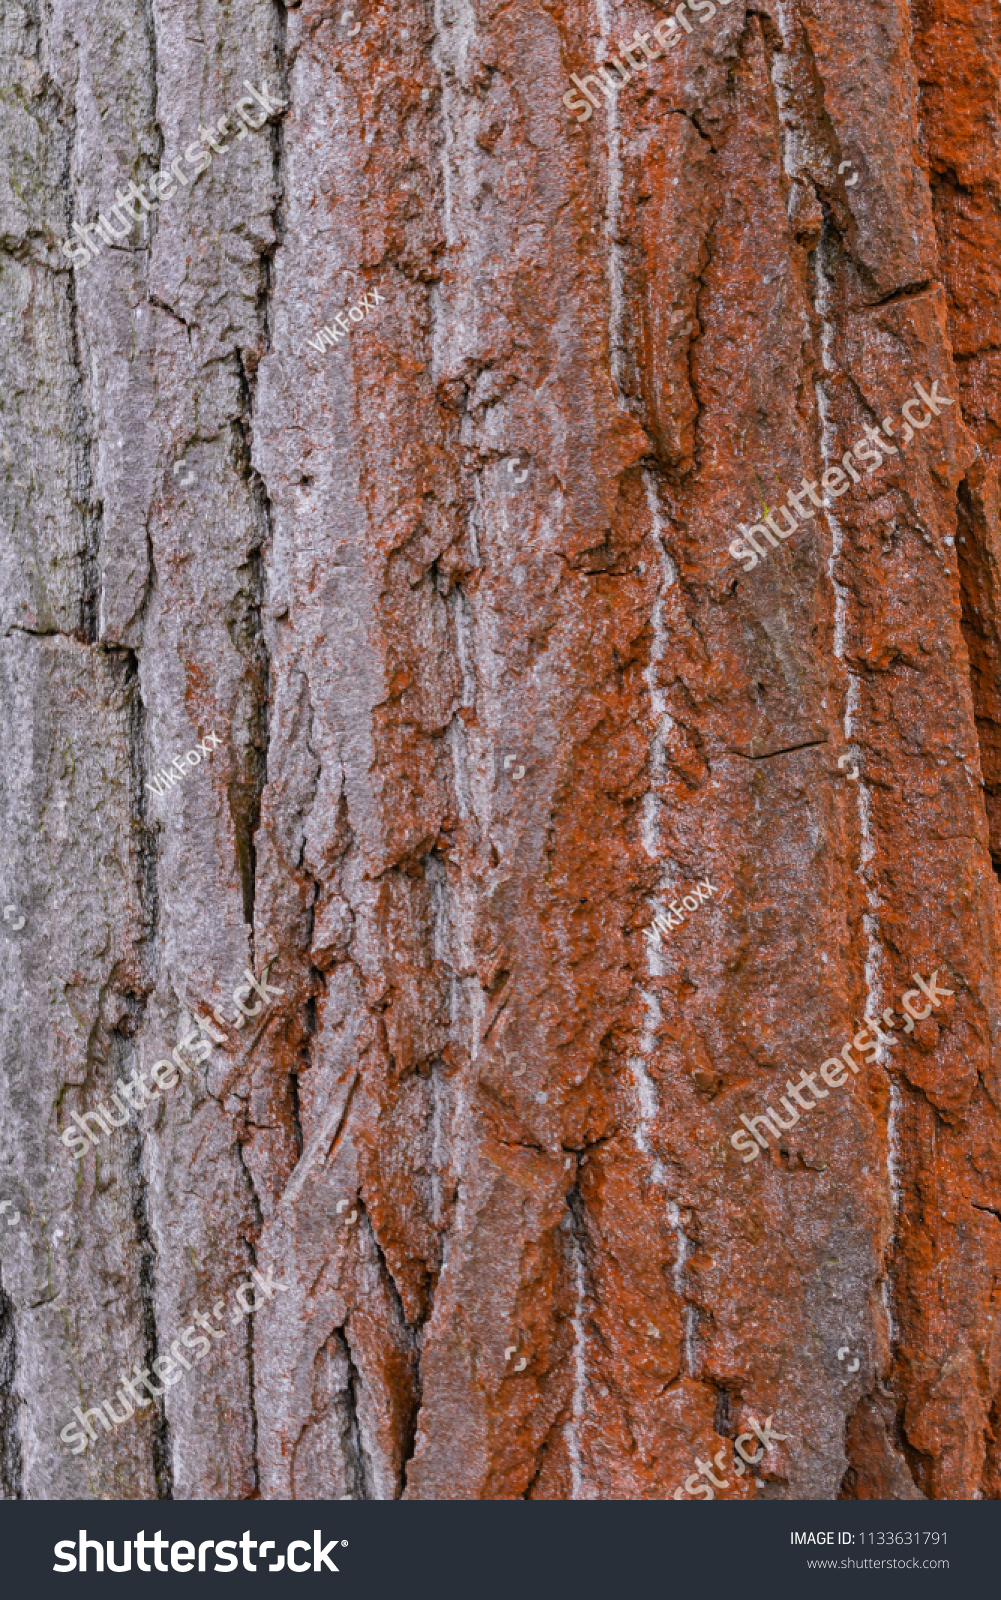 Brown and grey tree bark #1133631791